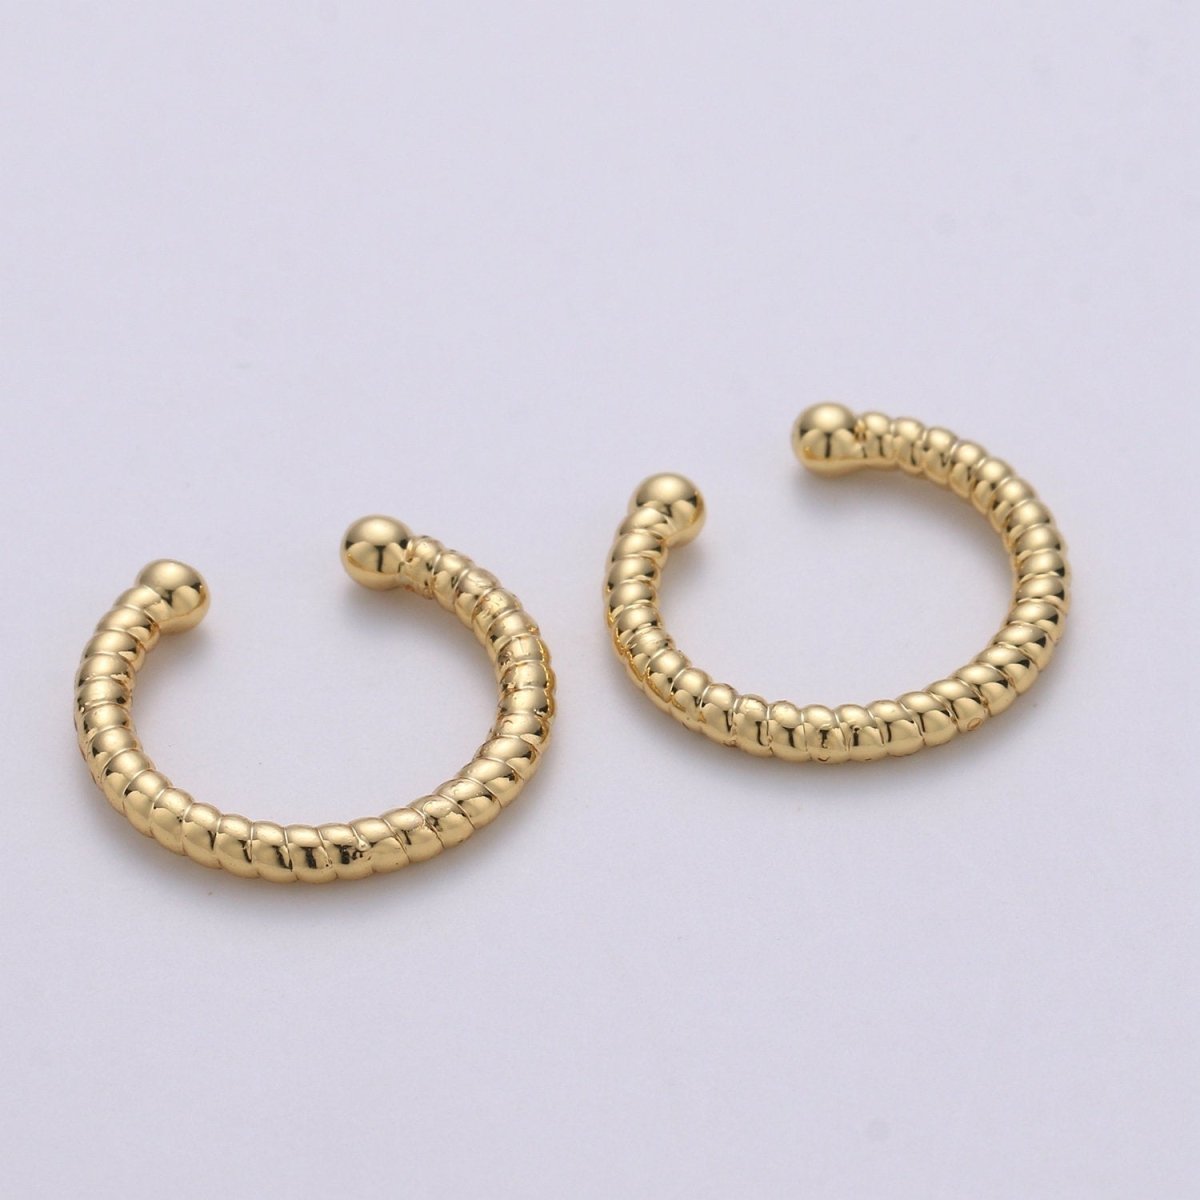 1x Gold Filled Earring Simple Ear Cuff, Twisted ear cuff, Dainty ear cuff no piercing, gold ear cuff, Minimalist earring Jewelry AI-119 - DLUXCA